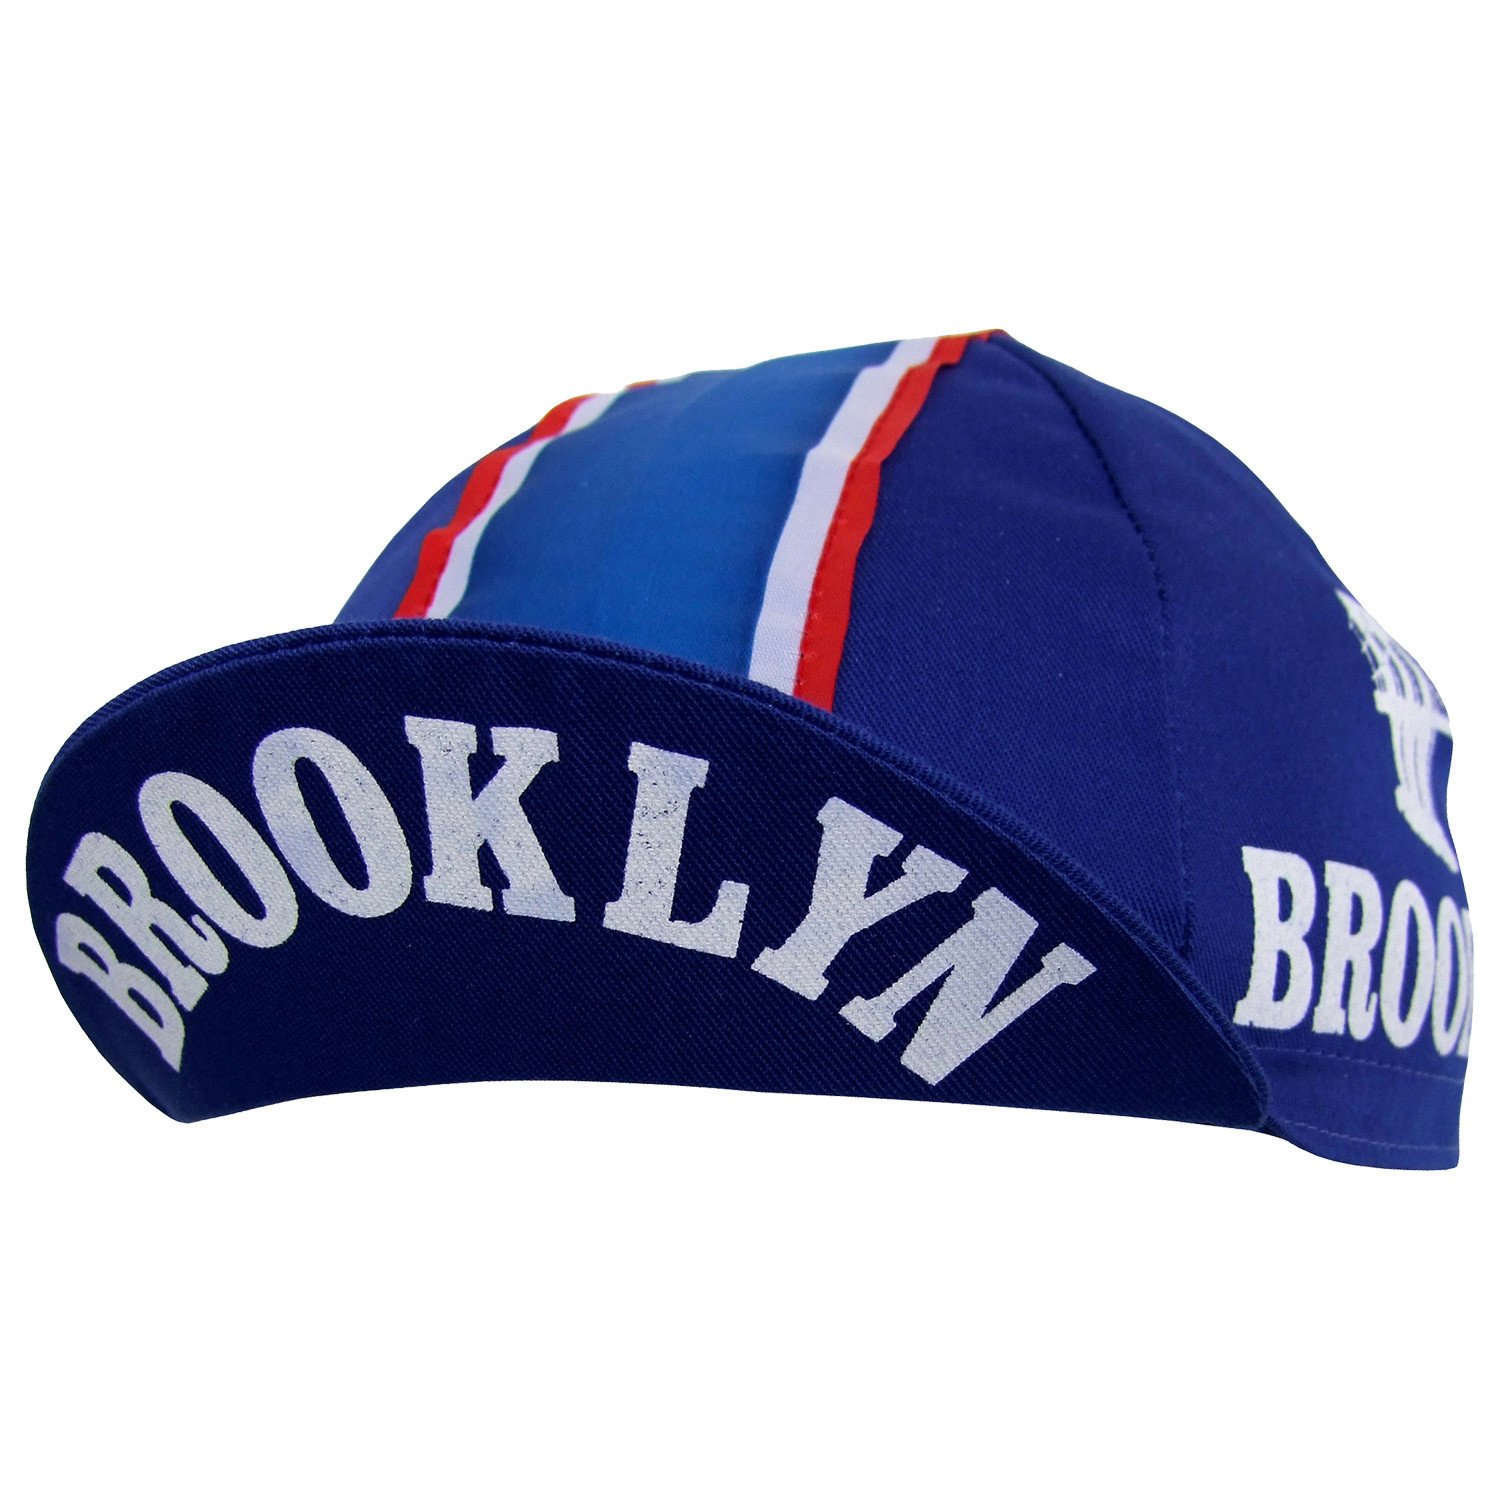 Brooklyn Retro Cotton Cap - Prendas Ciclismo